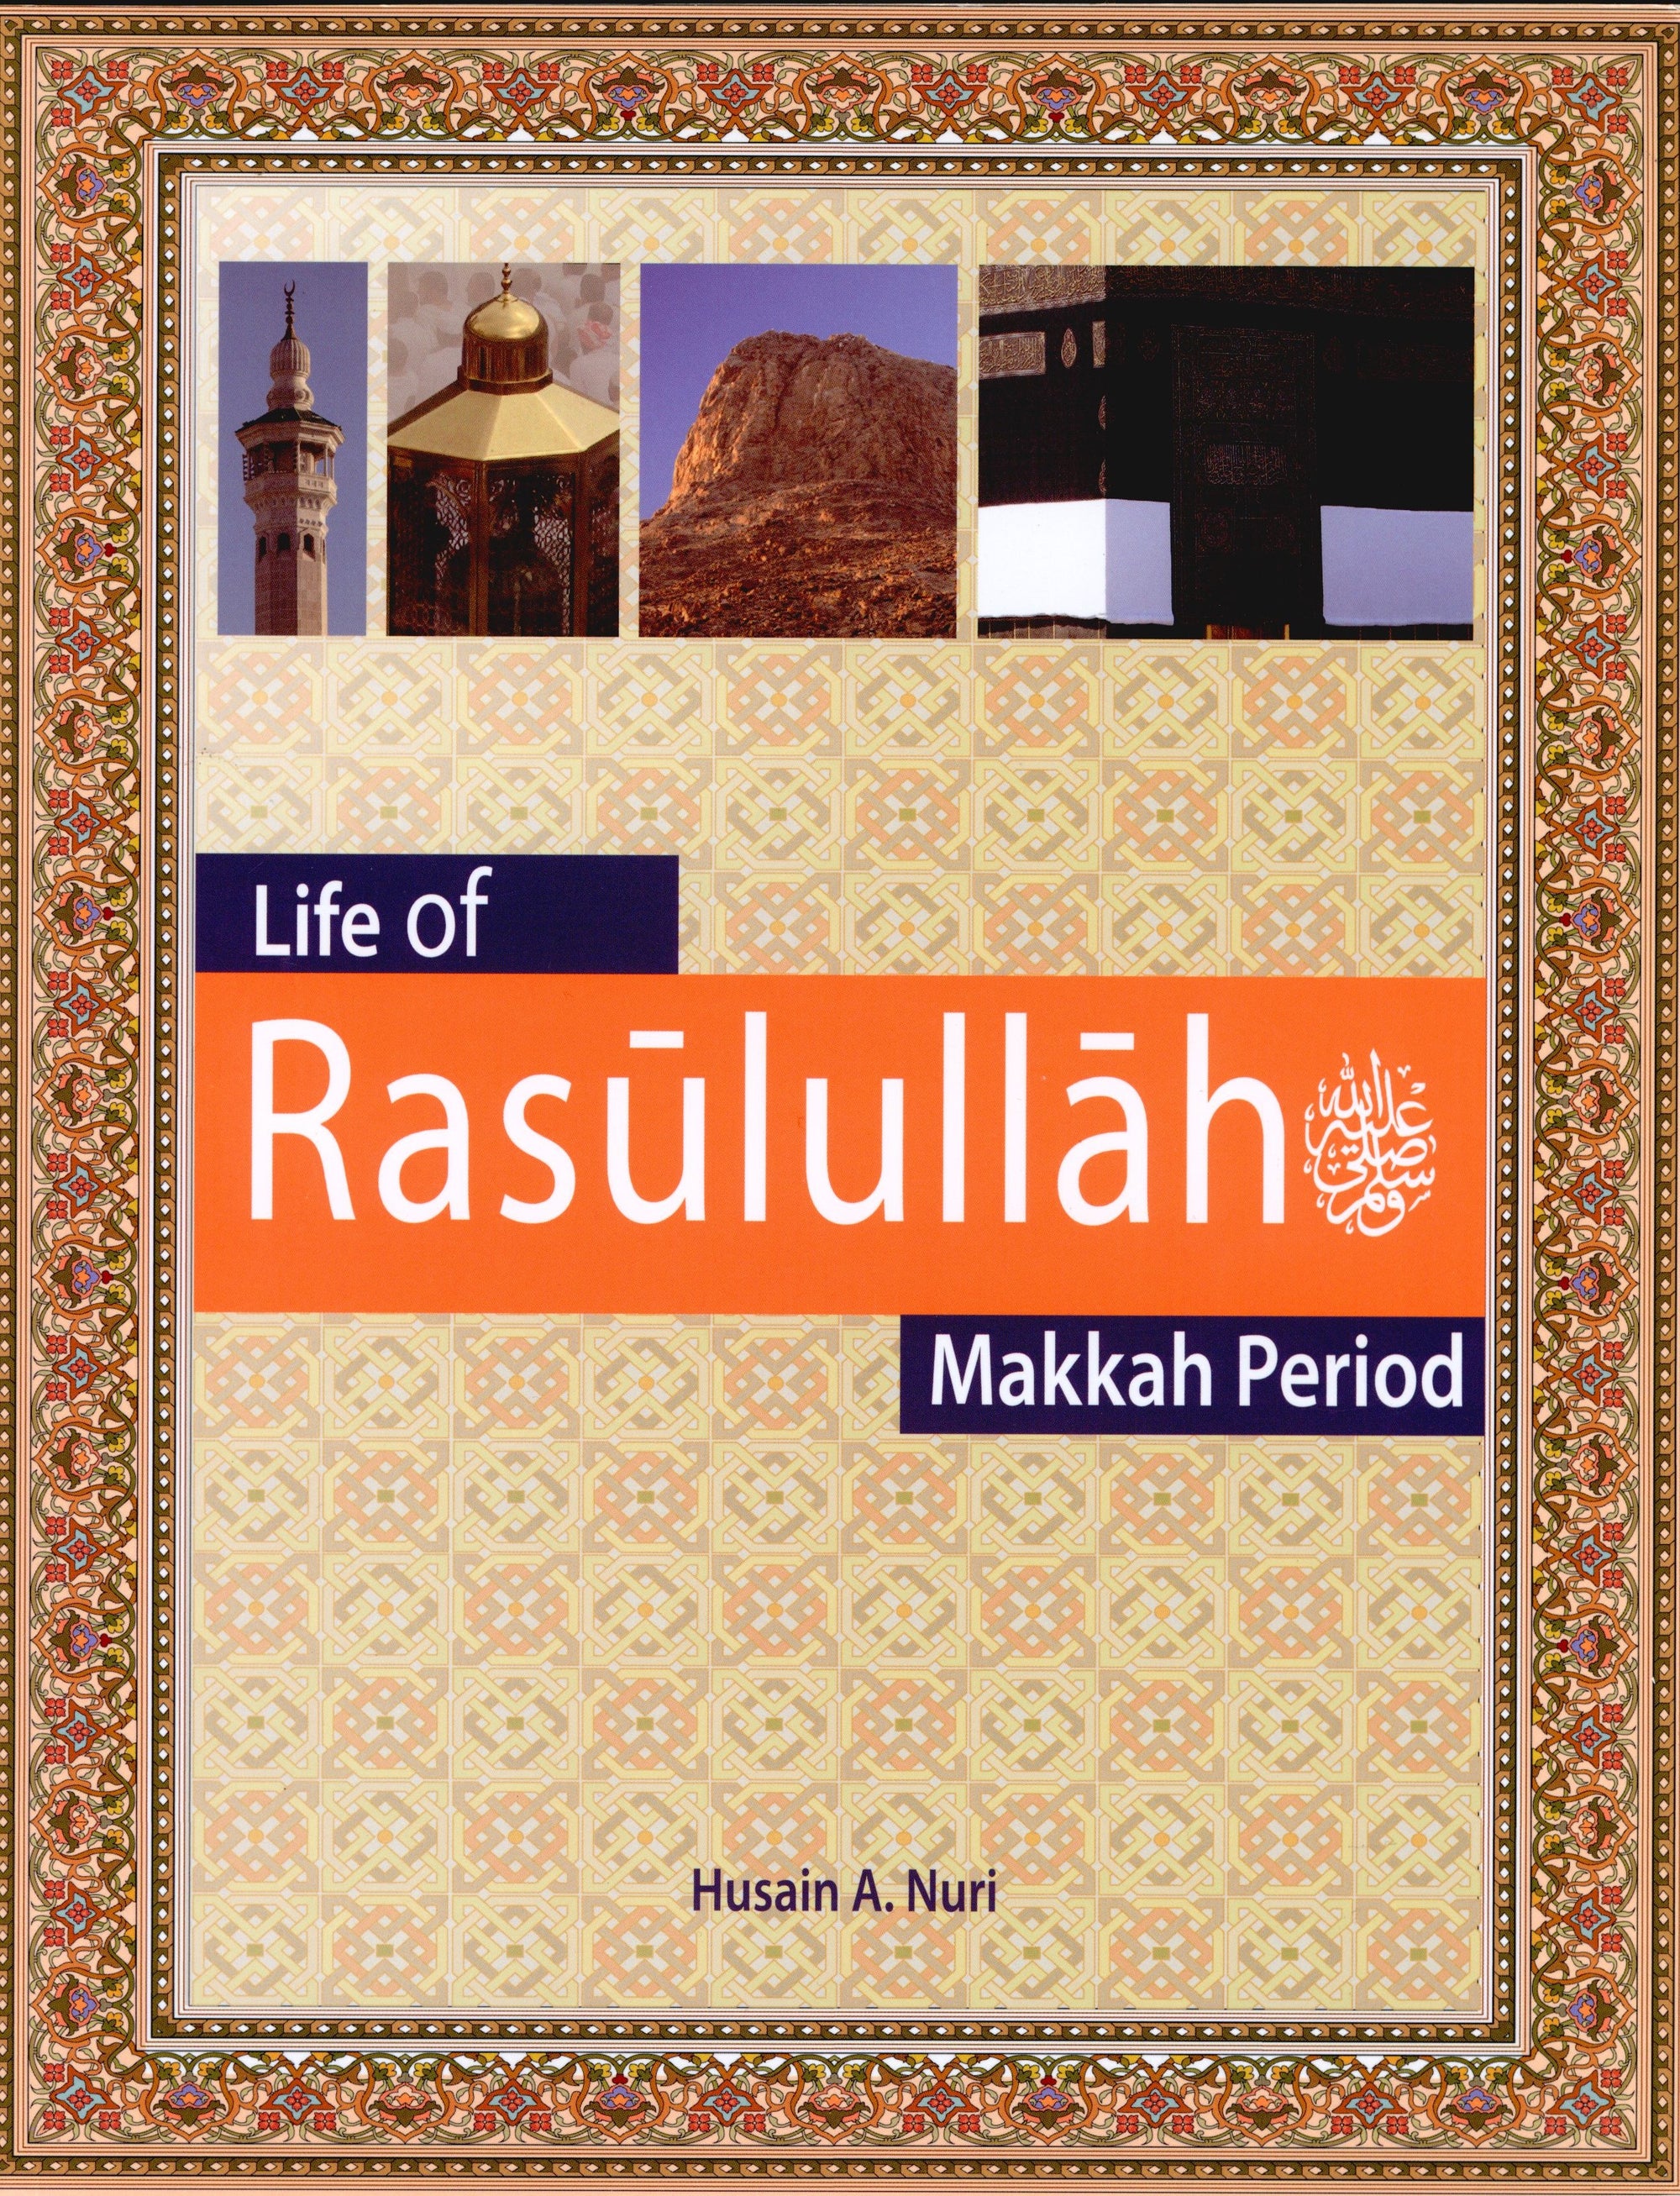 Weekend Learning Life of Rasulullah Makkah Period